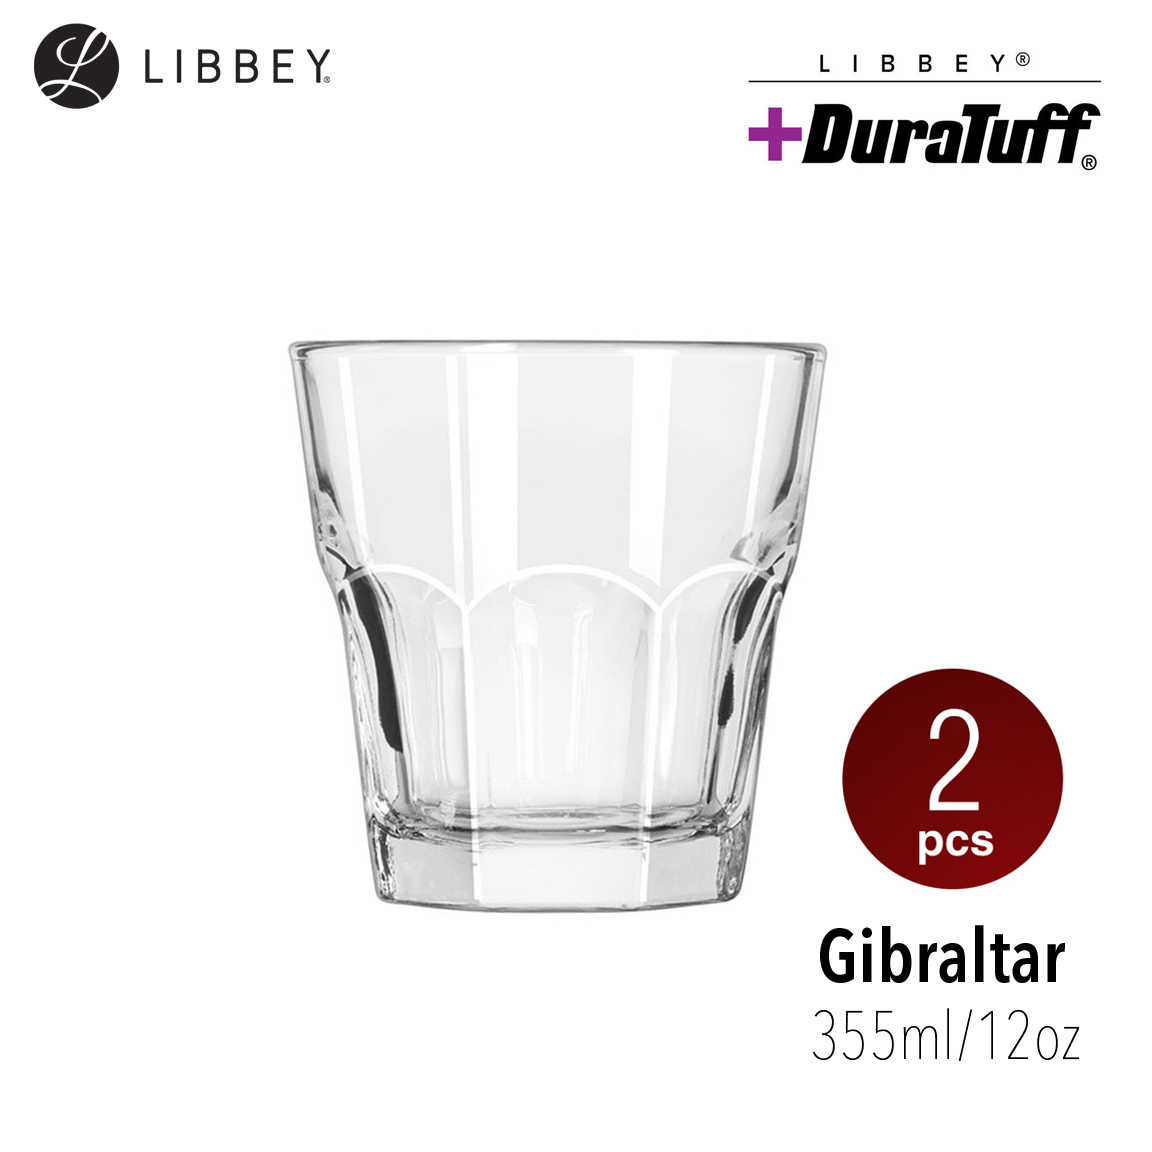 Libbey Gibraltar 15242 DuraTuff Glass Tumbler 266ml/9oz 2-pc Set